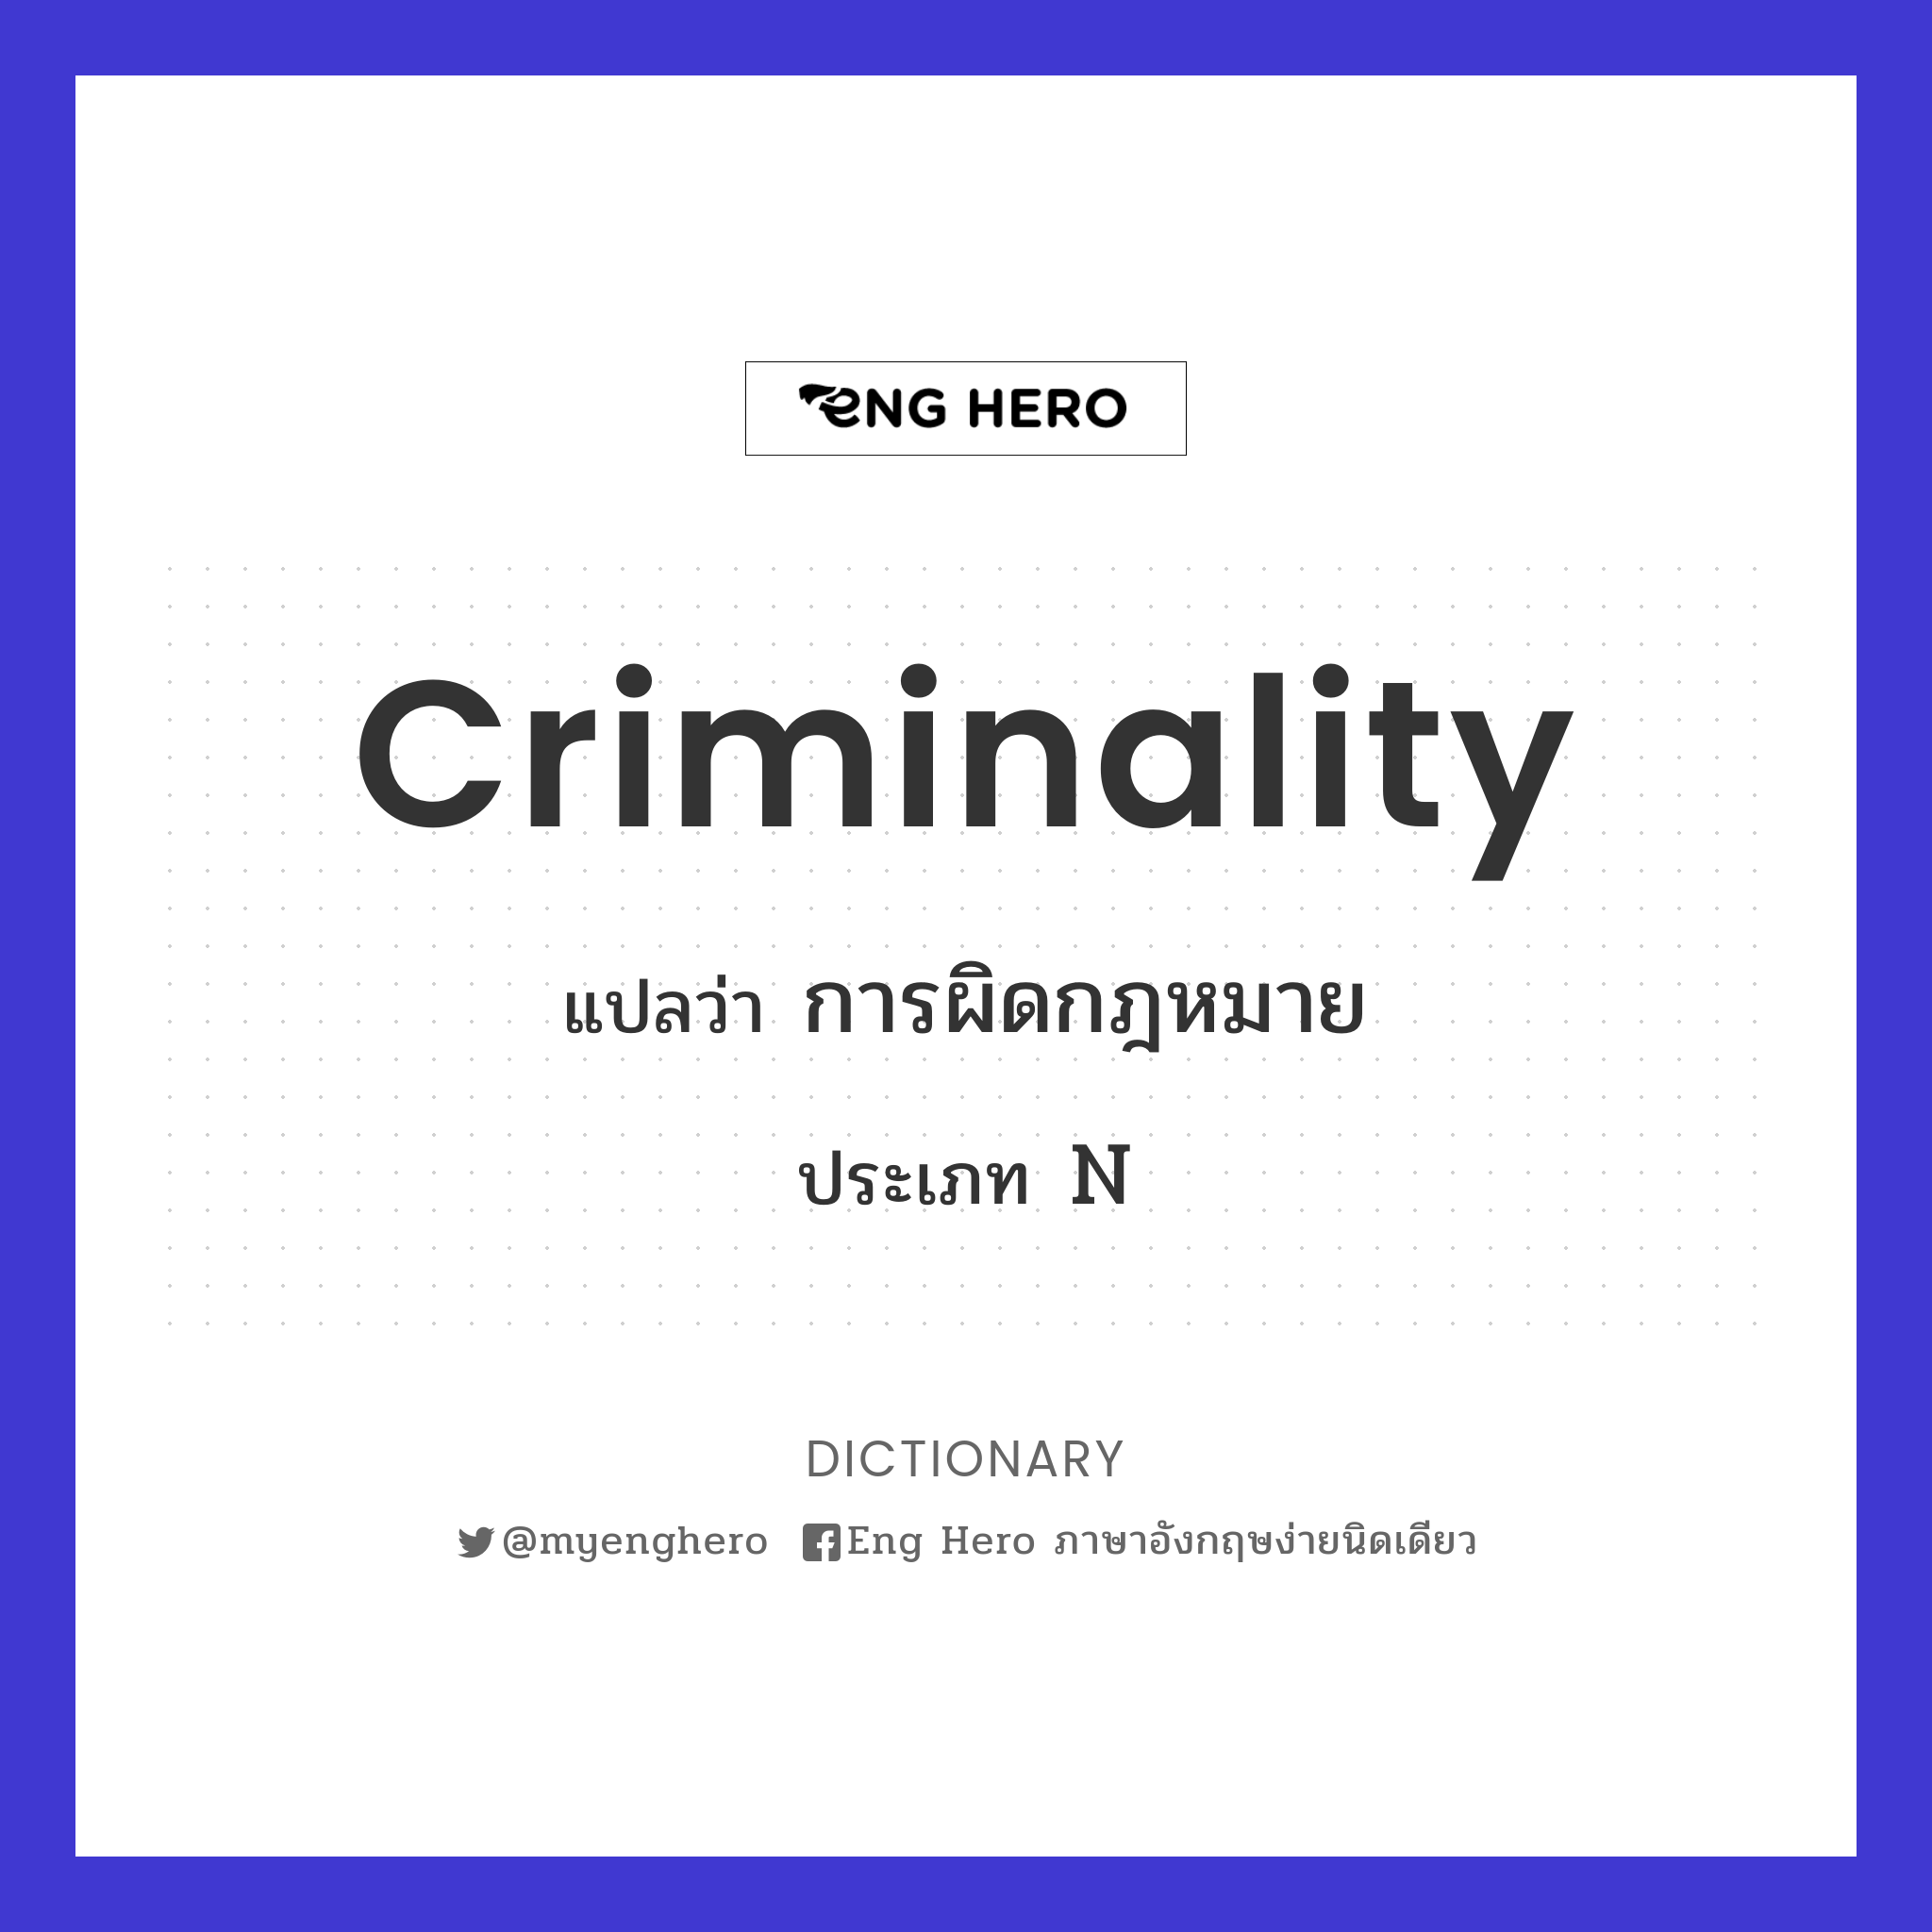 criminality